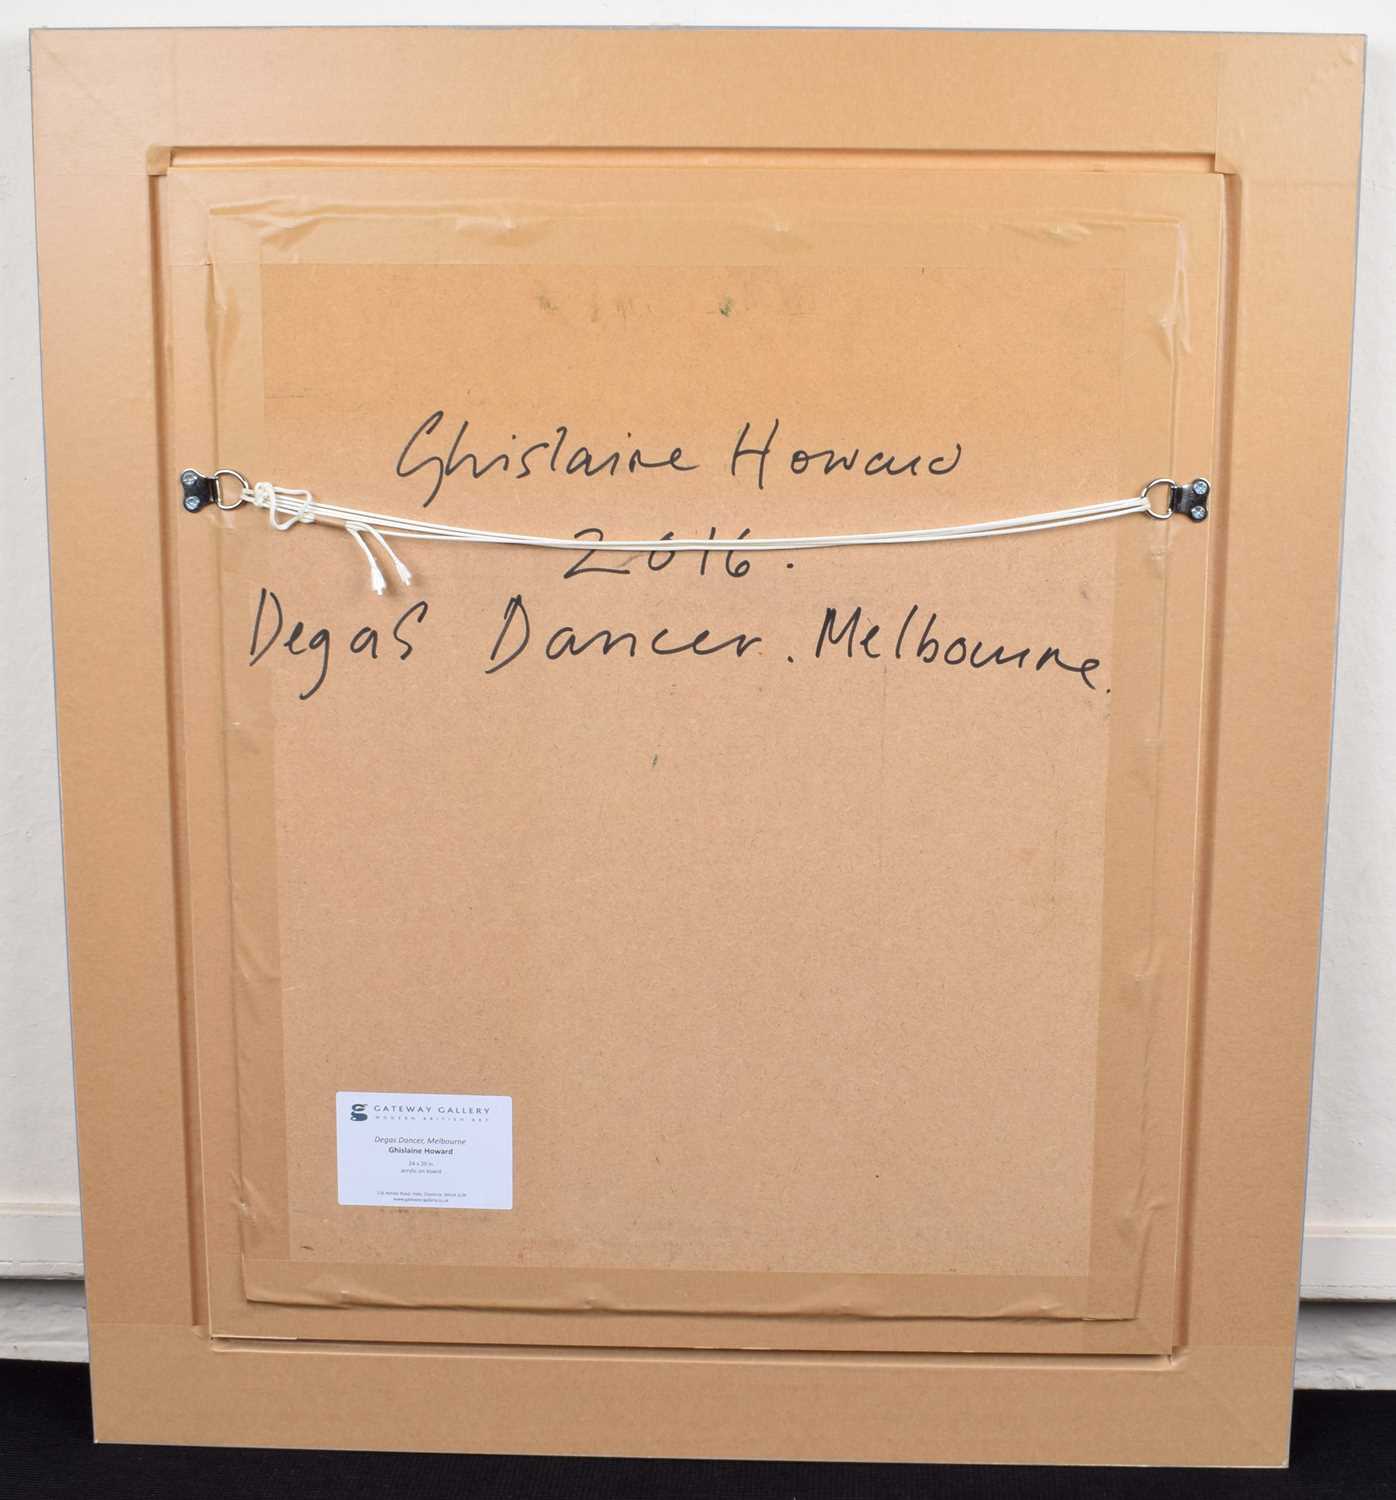 Ghislaine Howard (British 1953-) "Degas Dancer, Melbourne" - Image 3 of 3